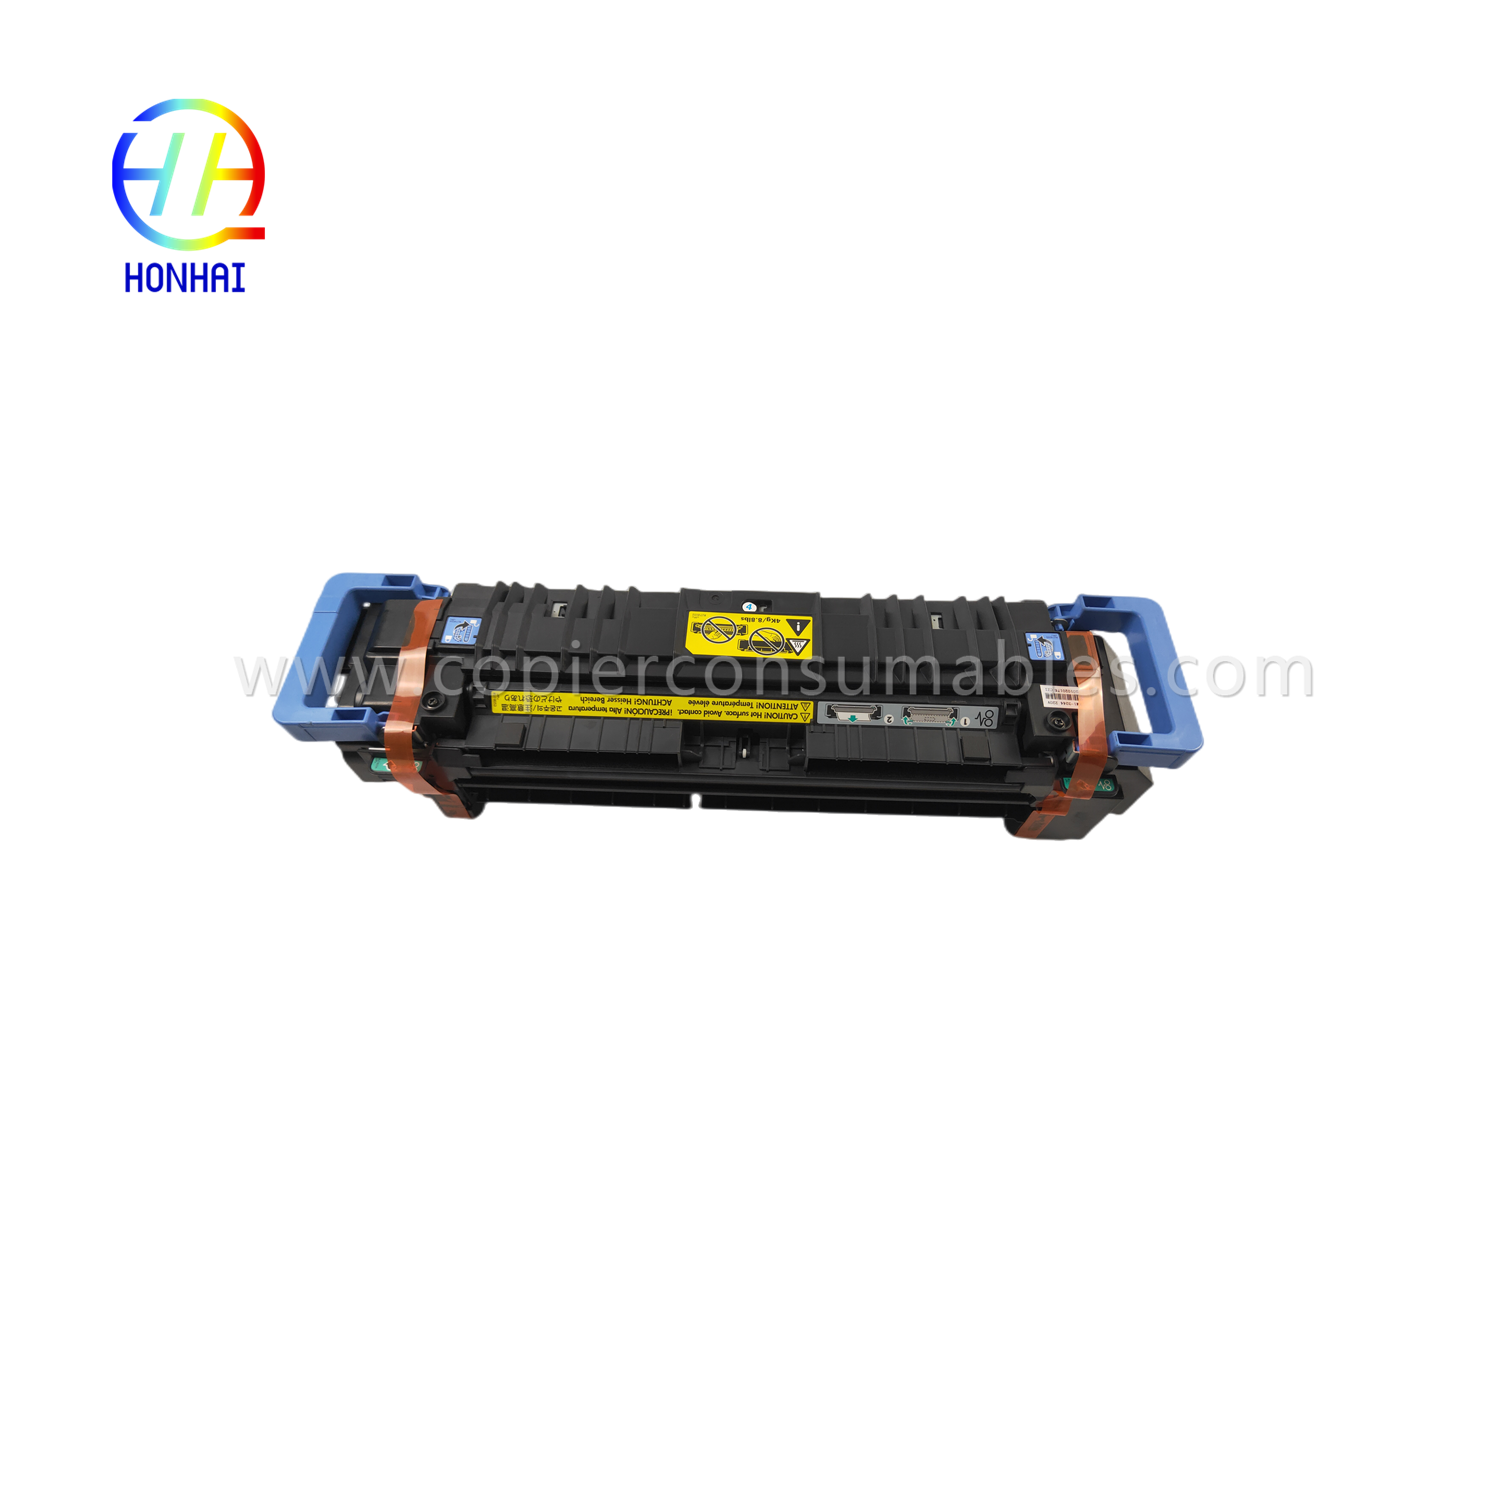 https://c585.goodao.net/fuser-assembly-unit-for-hp-m855-m880-m855dn-m855xh-m880z-m880z-c1n54-67901-c1n58-67901-fusing-assyduct-product/fixing